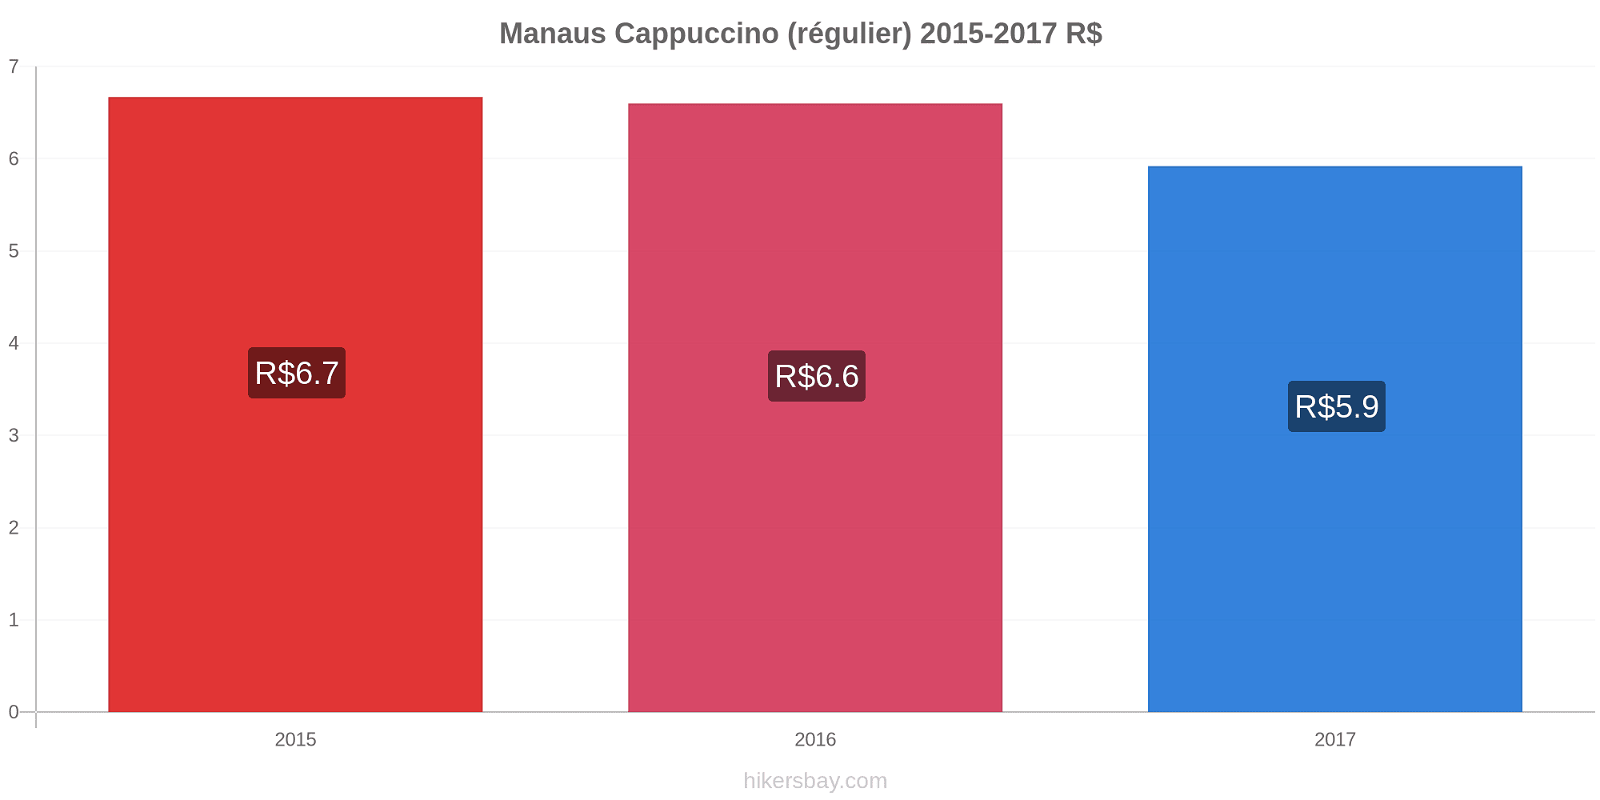 Manaus changements de prix Cappuccino (régulier) hikersbay.com